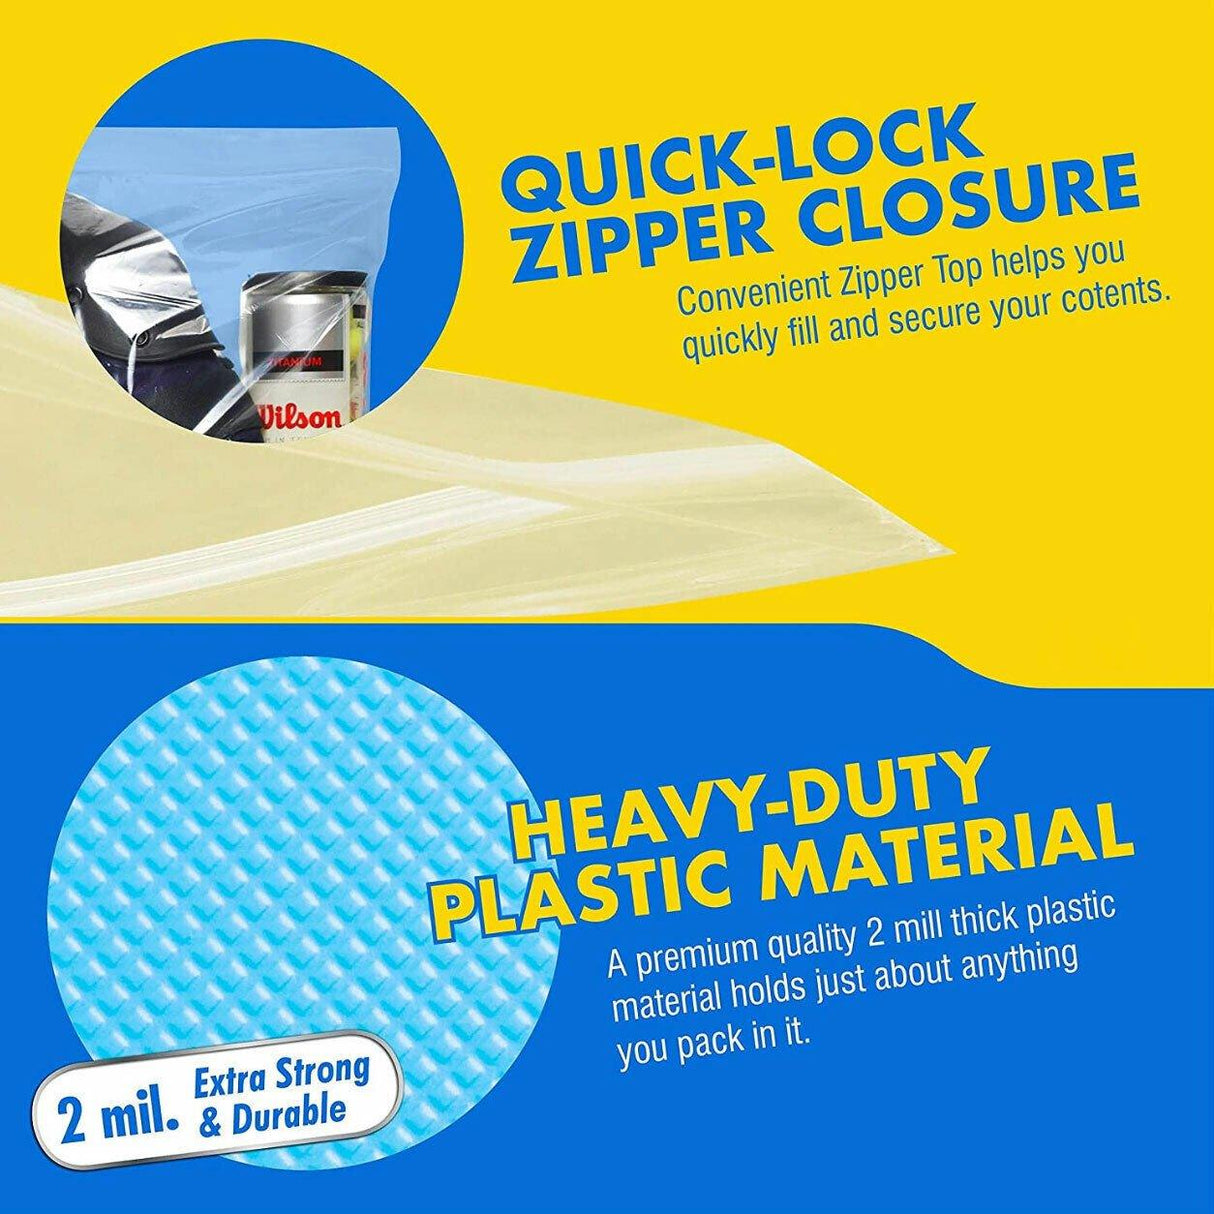 Durable plastic zip lock bags for versatile storage